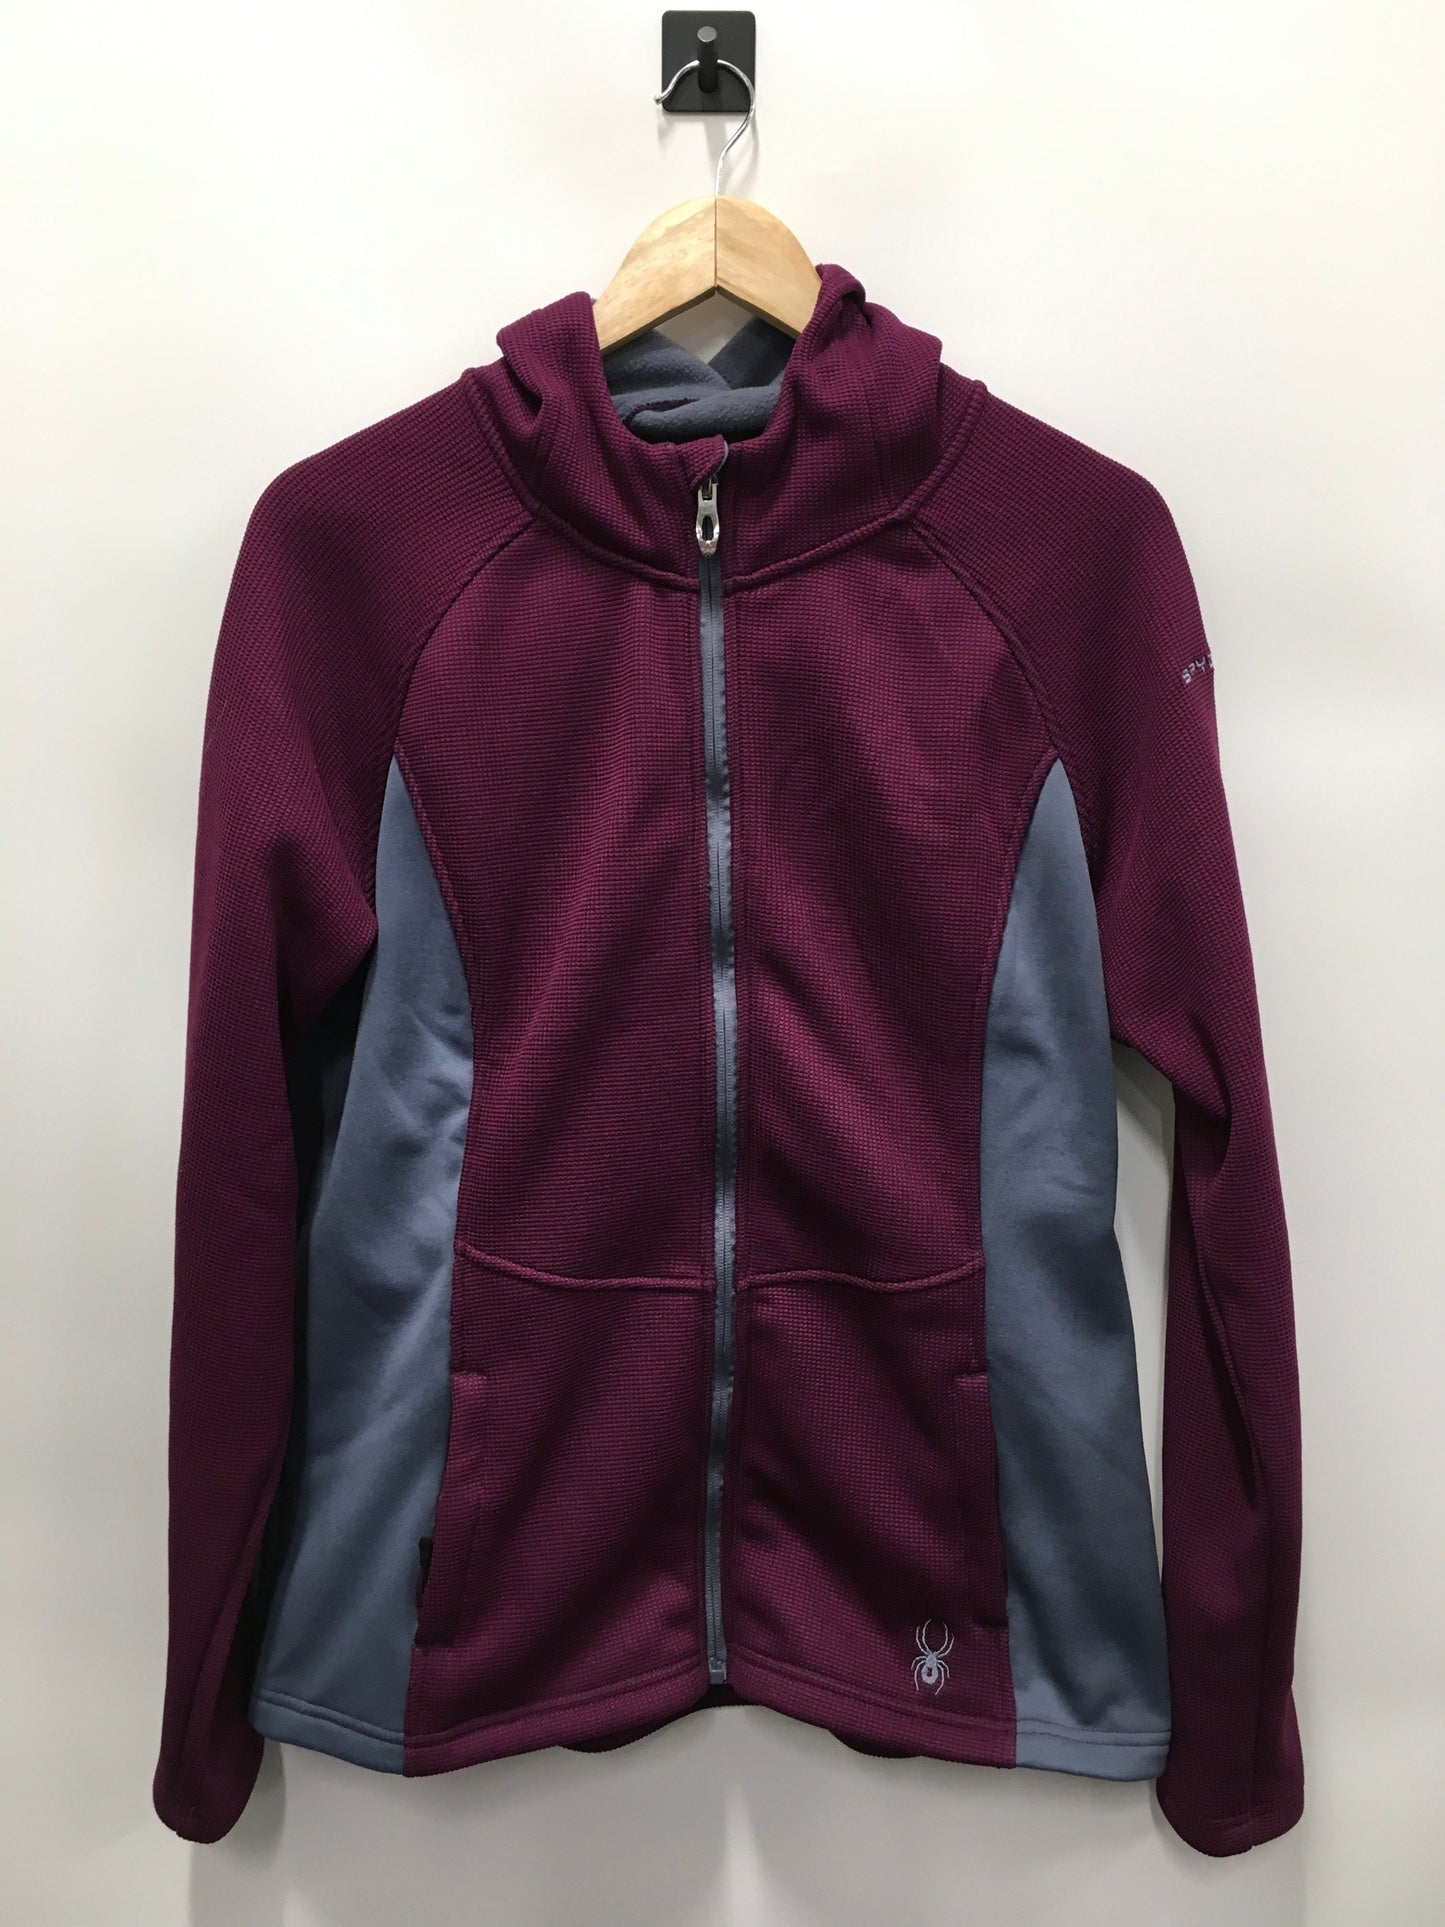 Purple Athletic Jacket Spyder, Size Xl